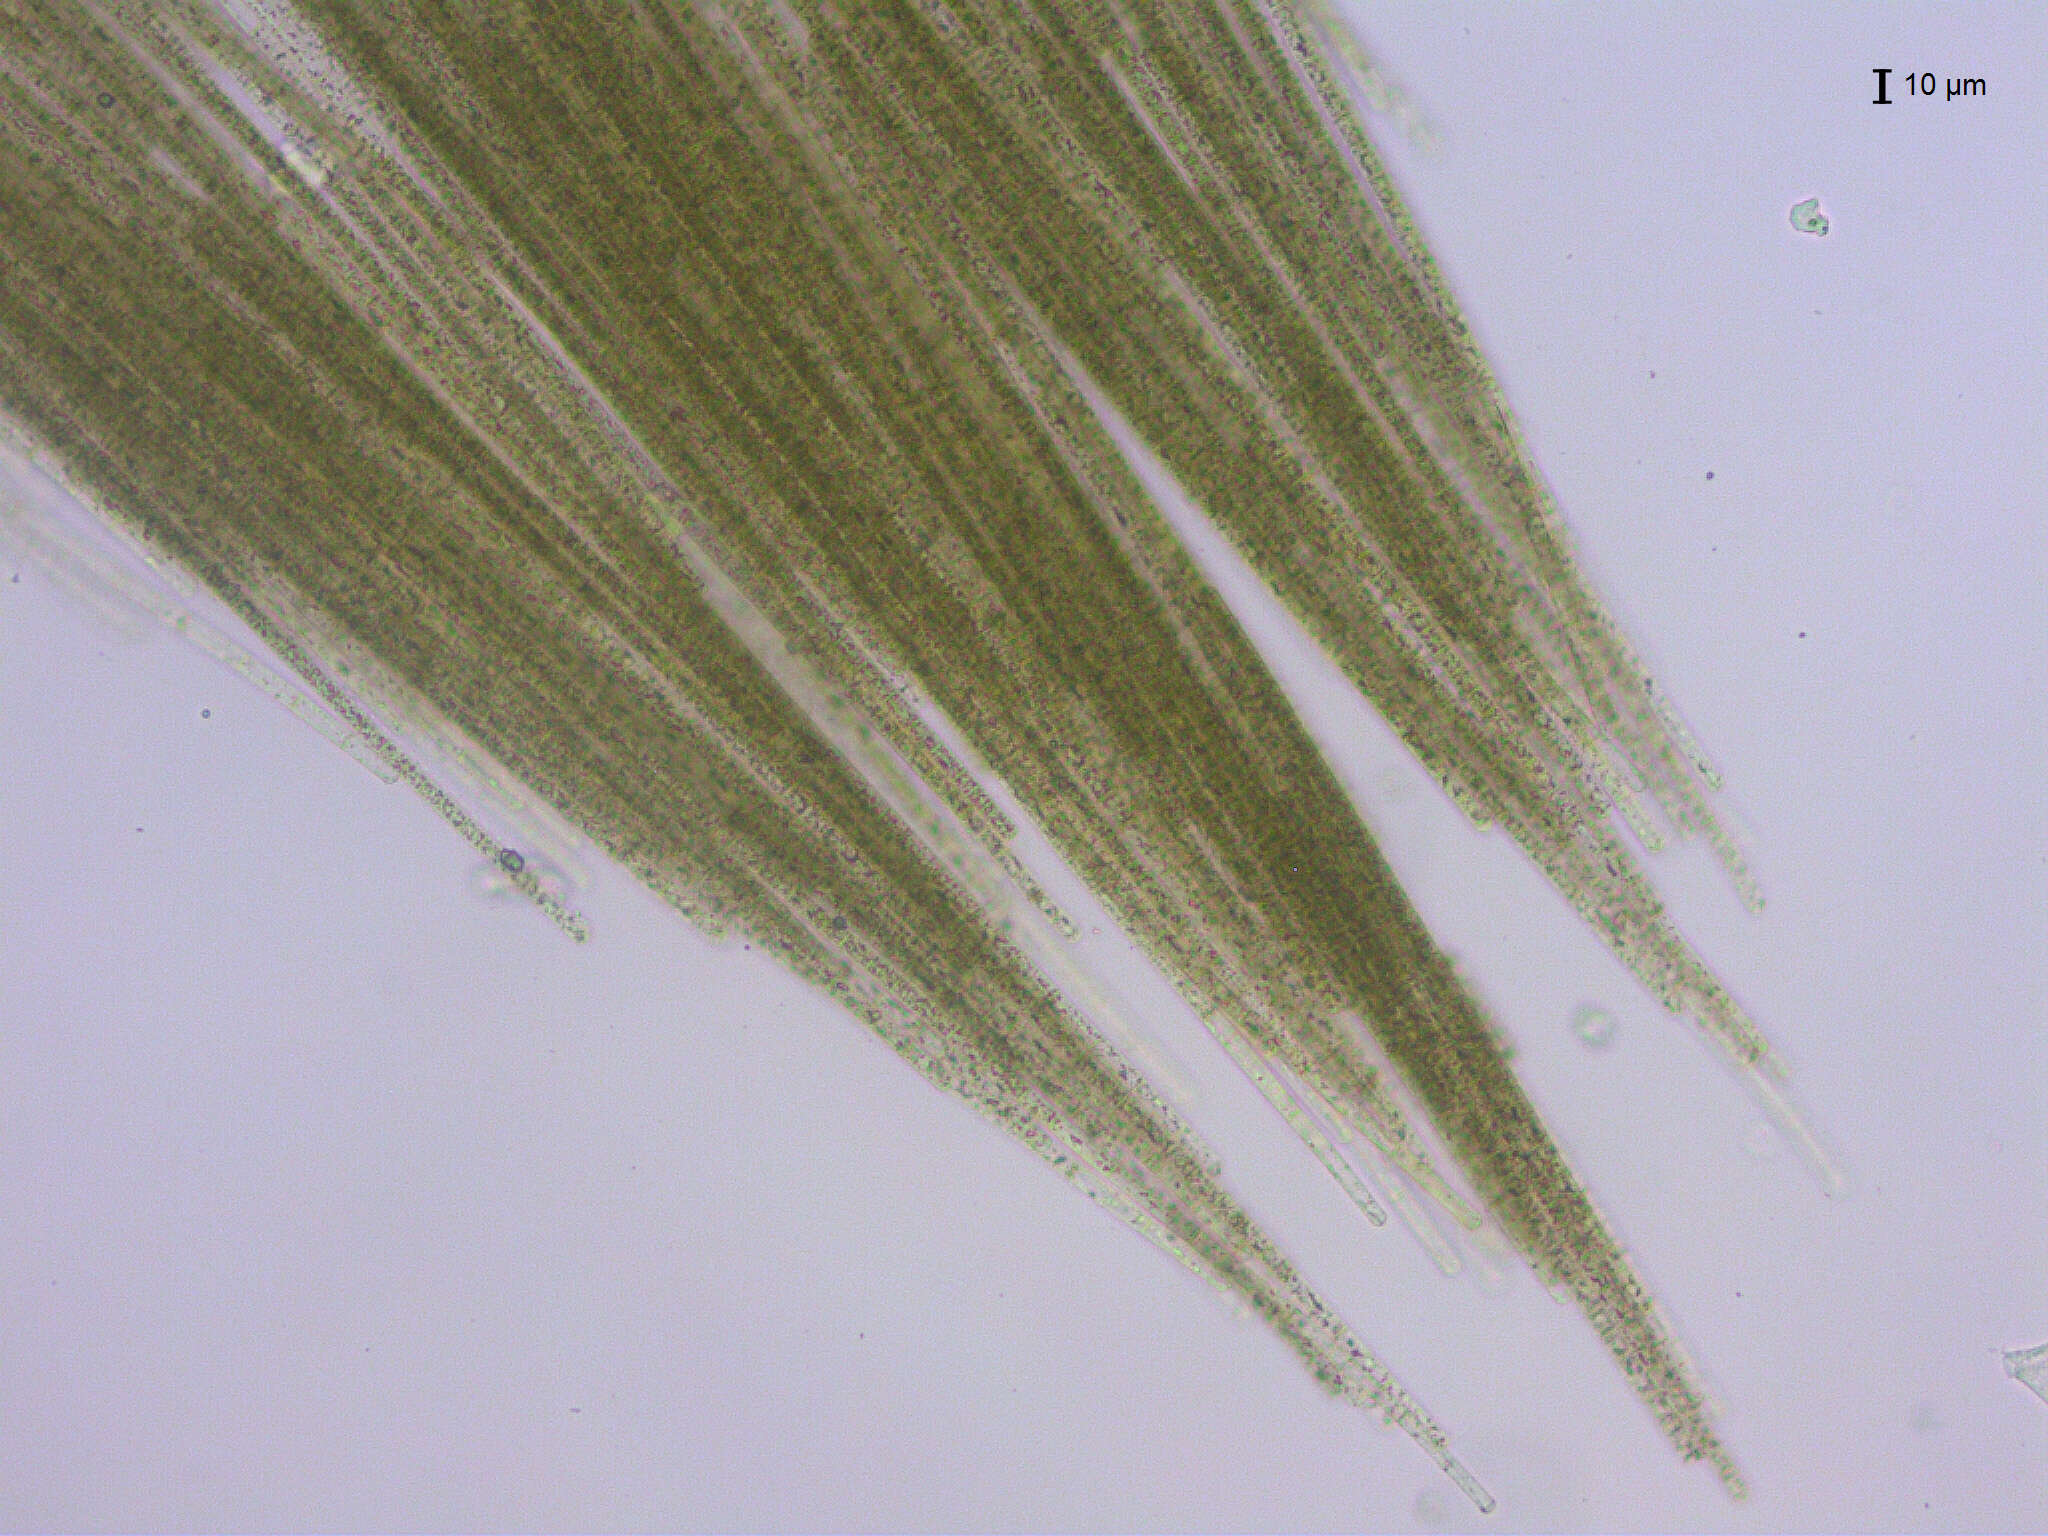 Aphanizomenon flos-aquae resmi